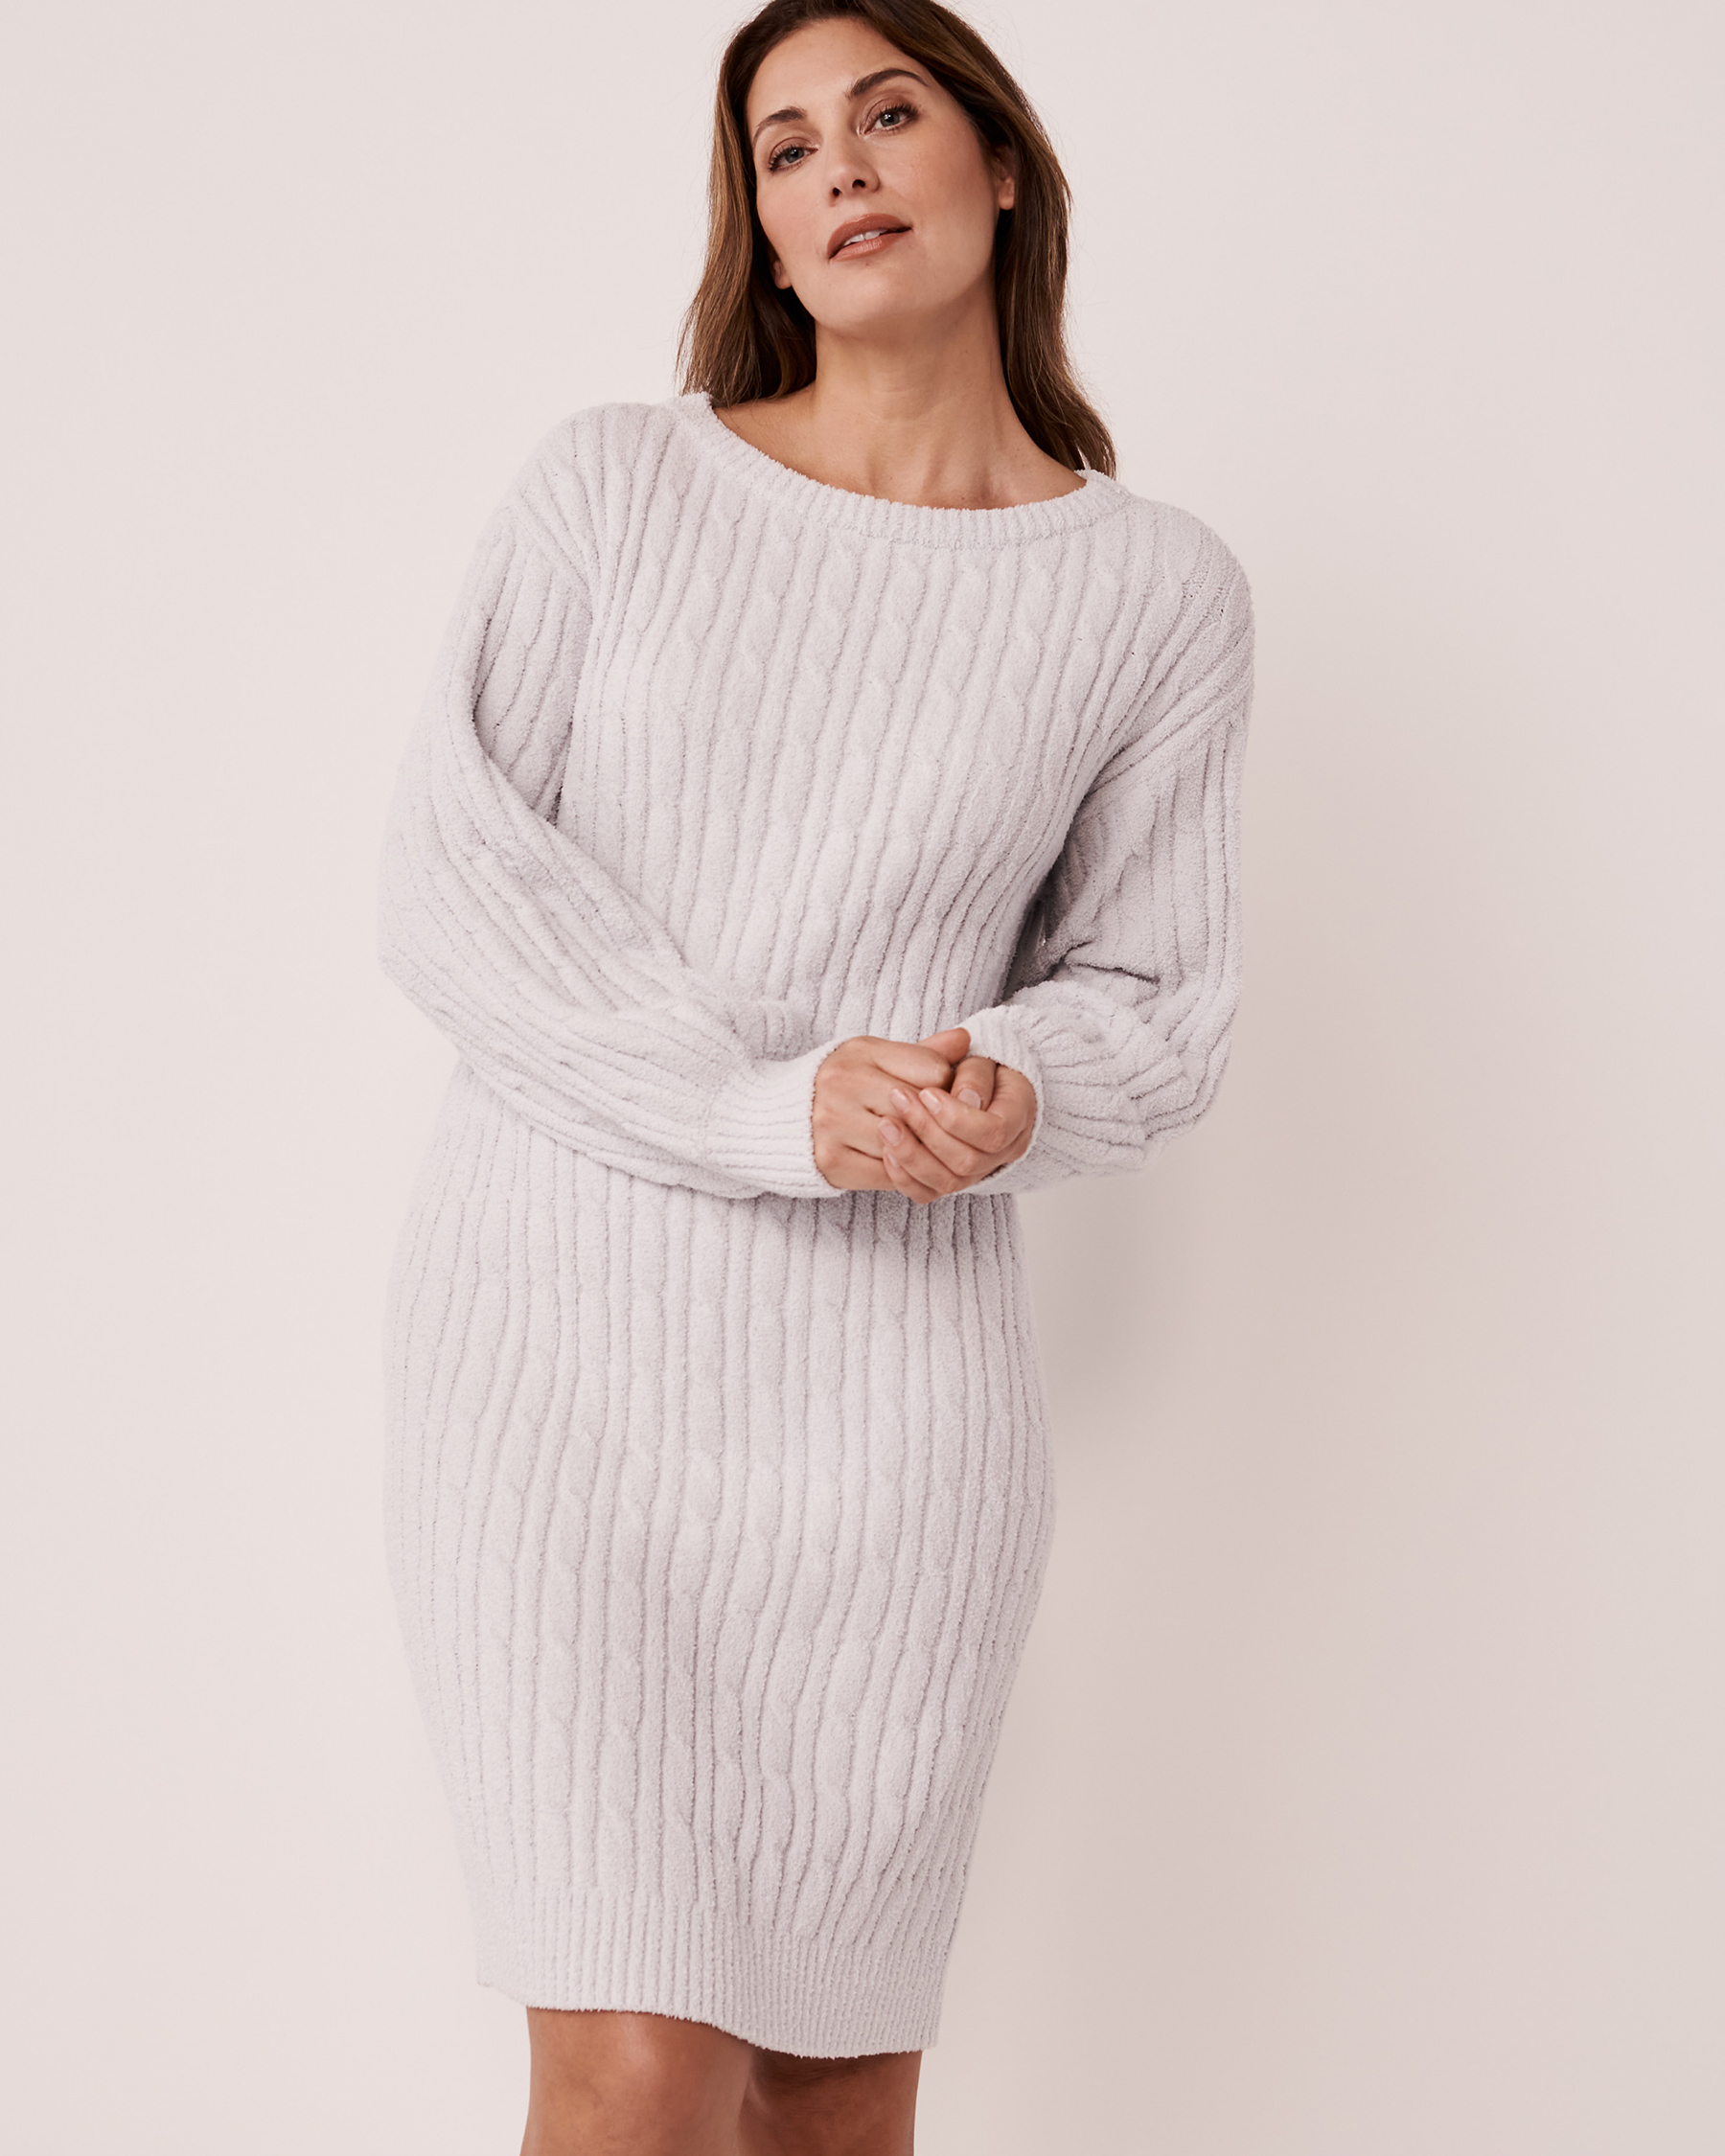 LA VIE EN ROSE Cable-knit Chenille Long Sleeve Dress Silver grey 50400030 - View1